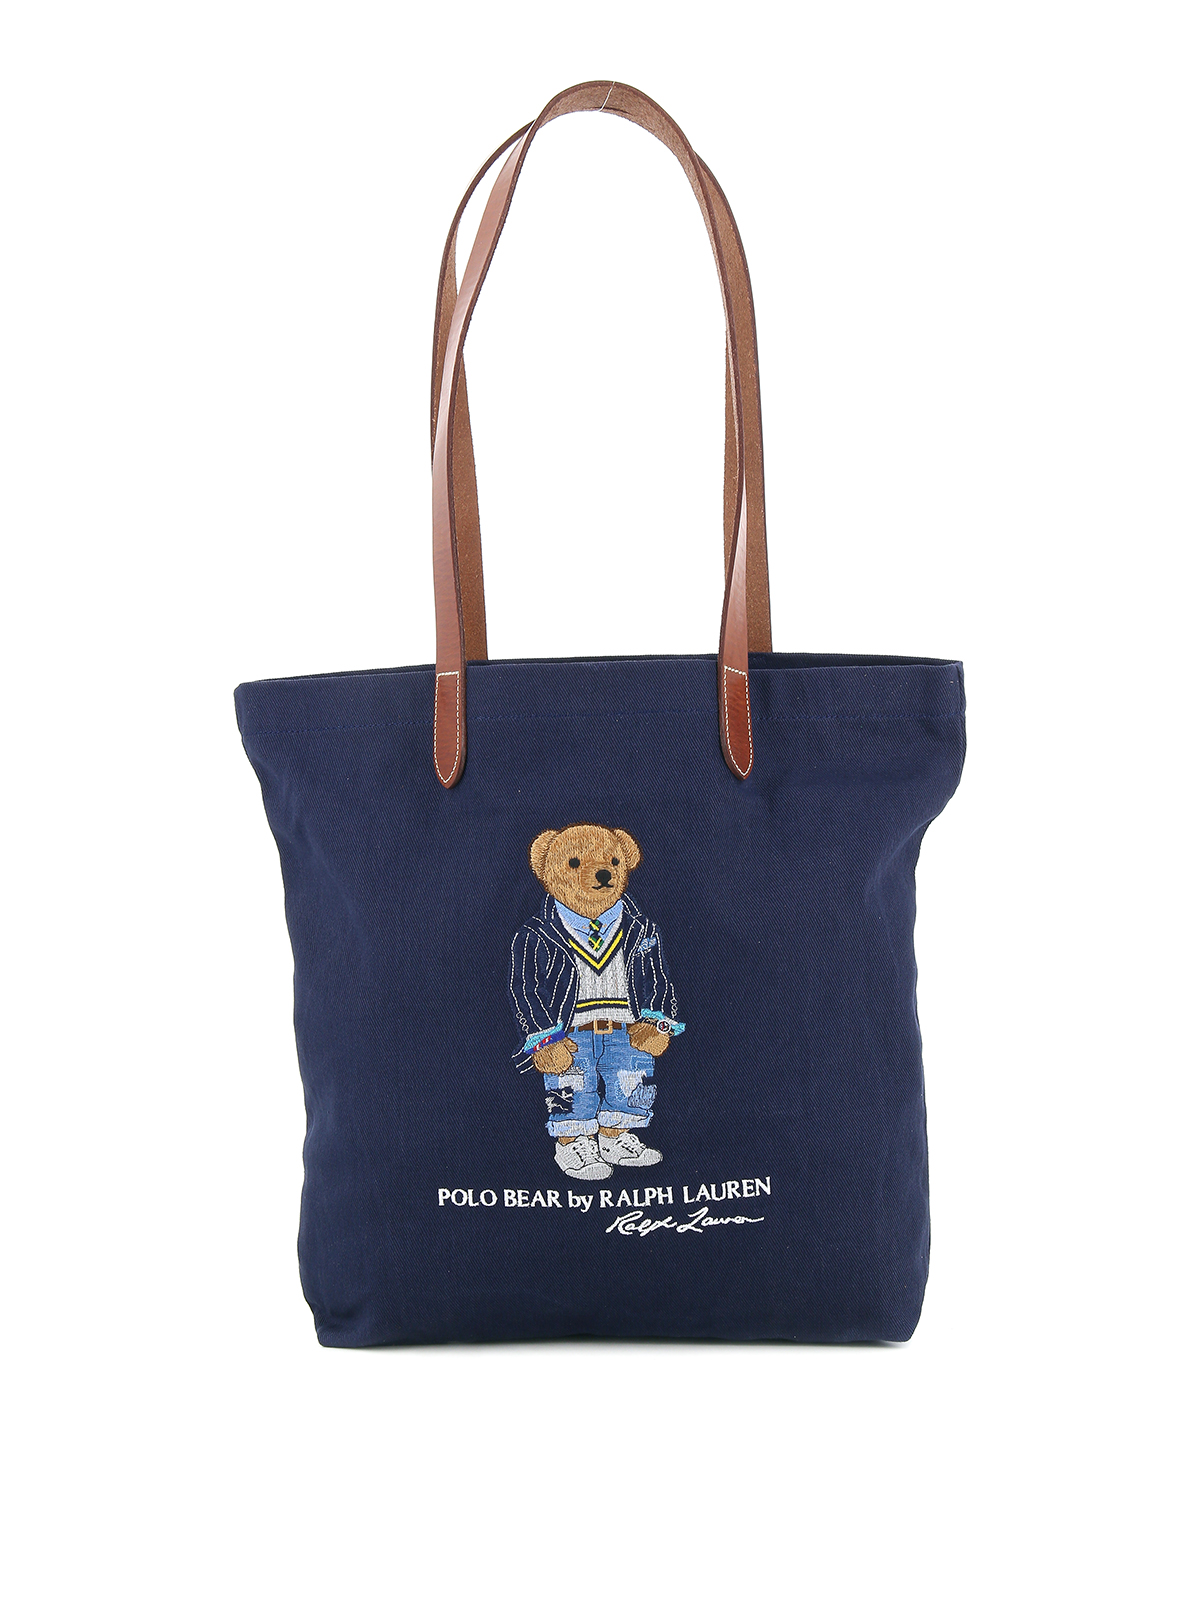 Totes bags Polo Ralph Lauren - Polo Bear tote - 405860356002 | iKRIX.com